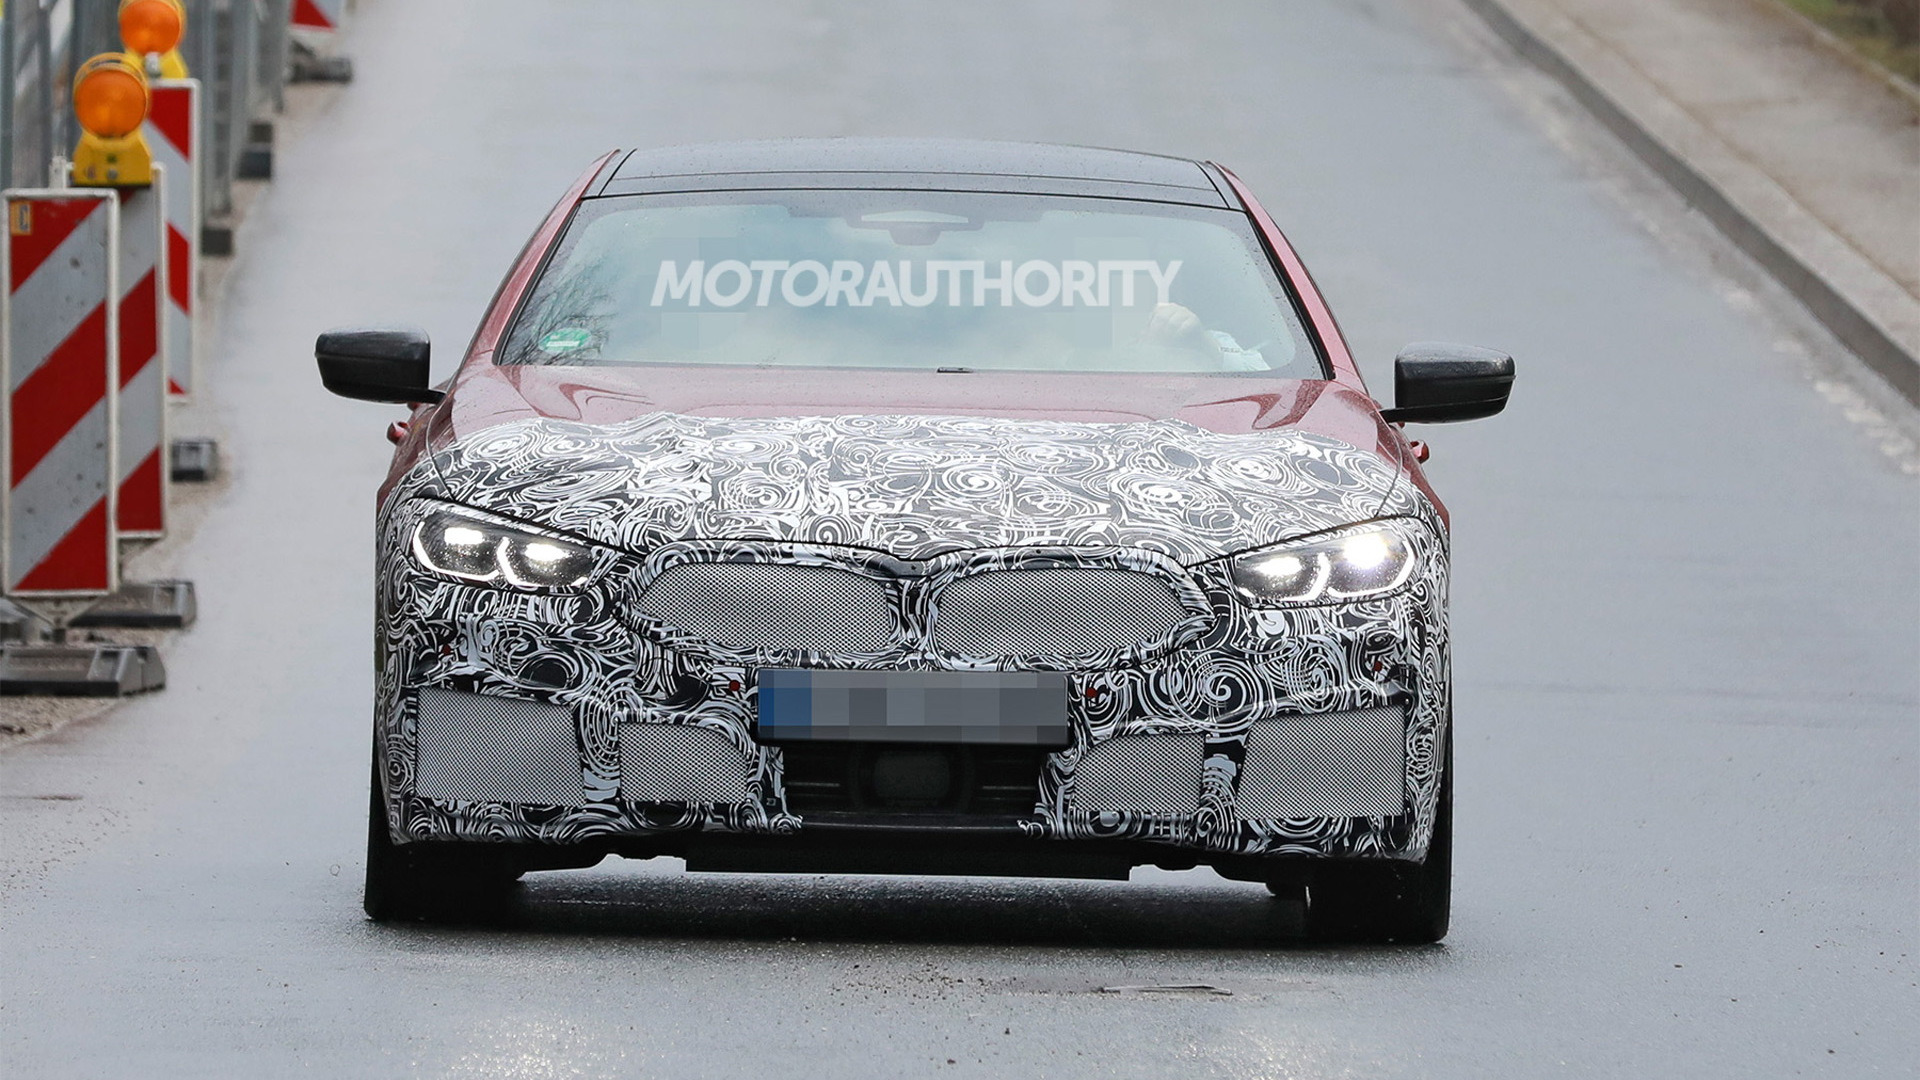 2023 BMW 8-Series Gran Coupe facelift spy shots - Photo credit: S. Baldauf/SB-Medien